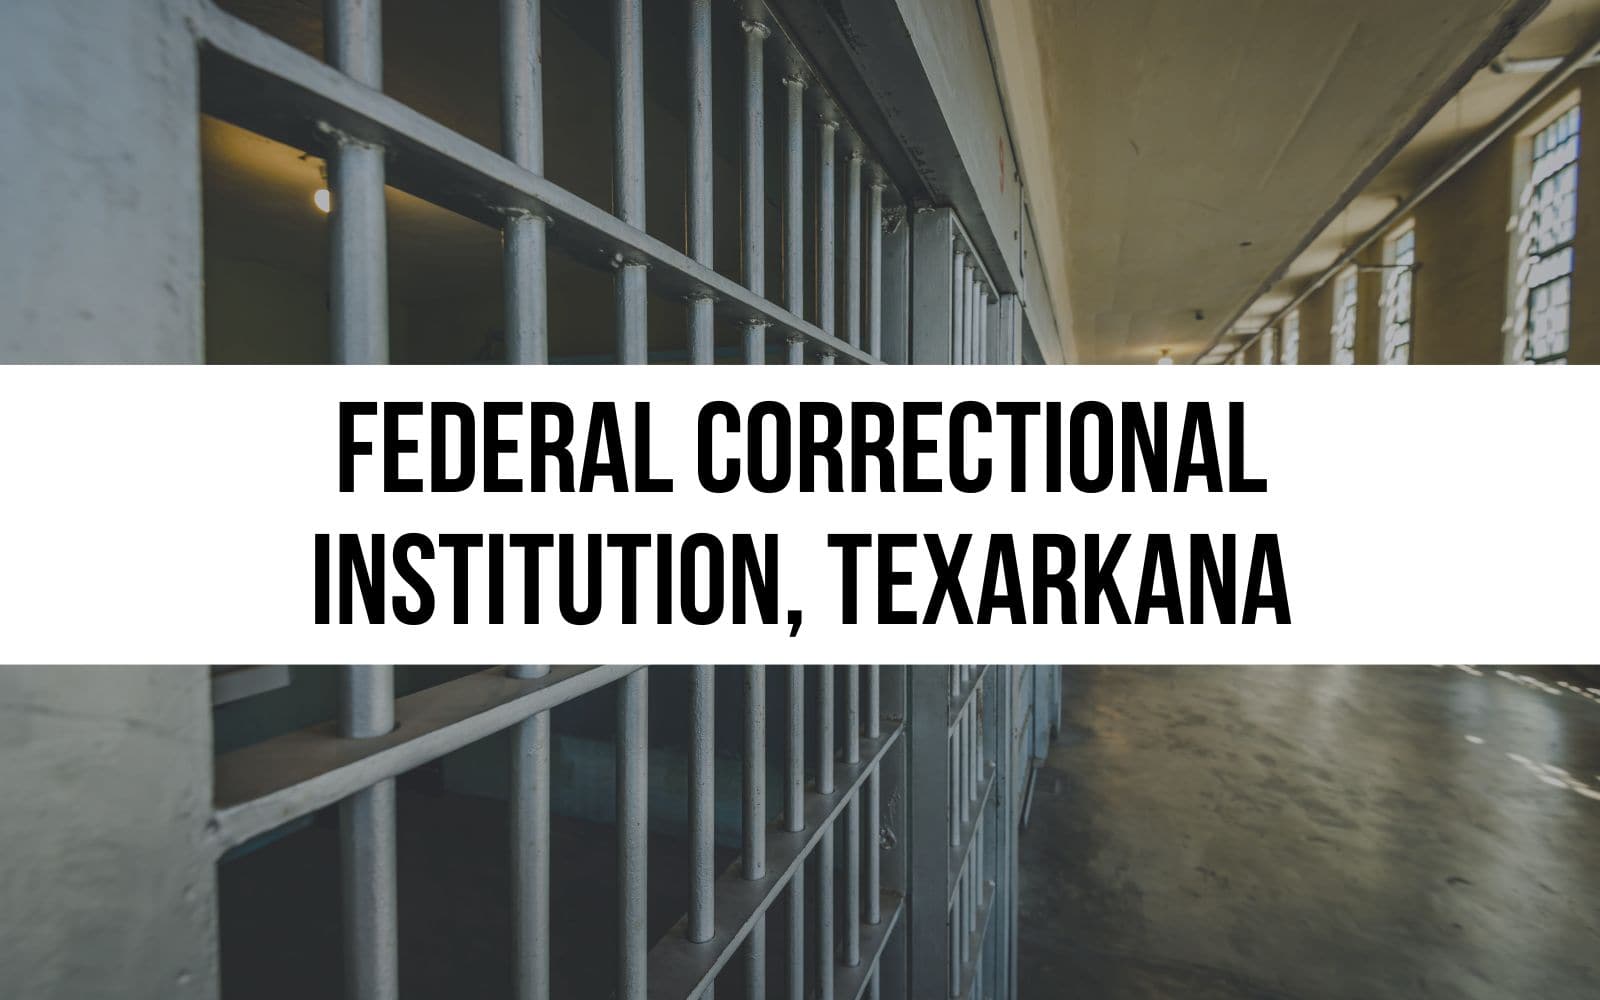 Federal Correctional Institution, Texarkana